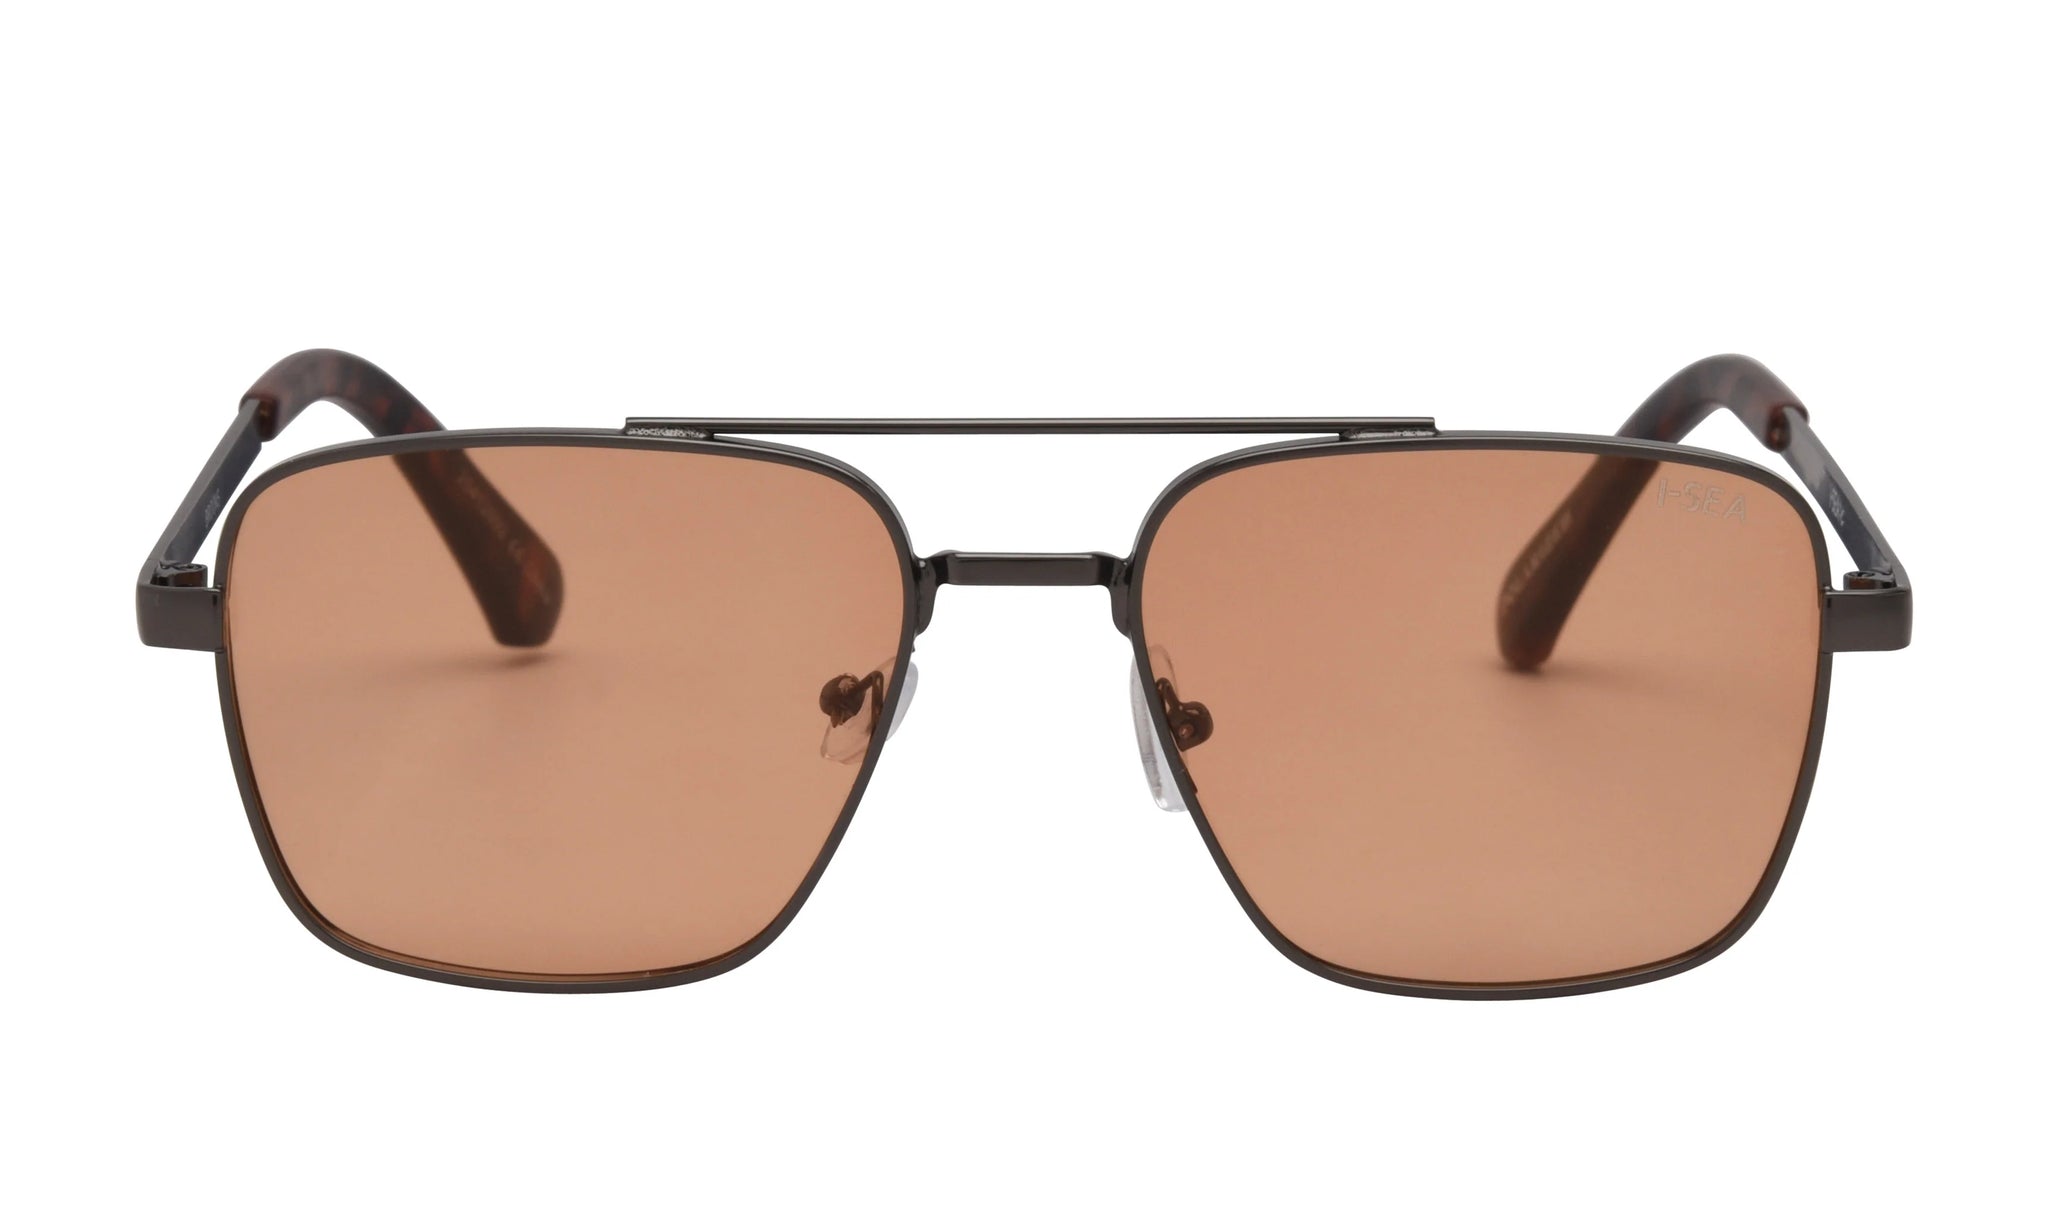 Brooks Gunmetal/Amber Polarized Sunglasses by I-Sea